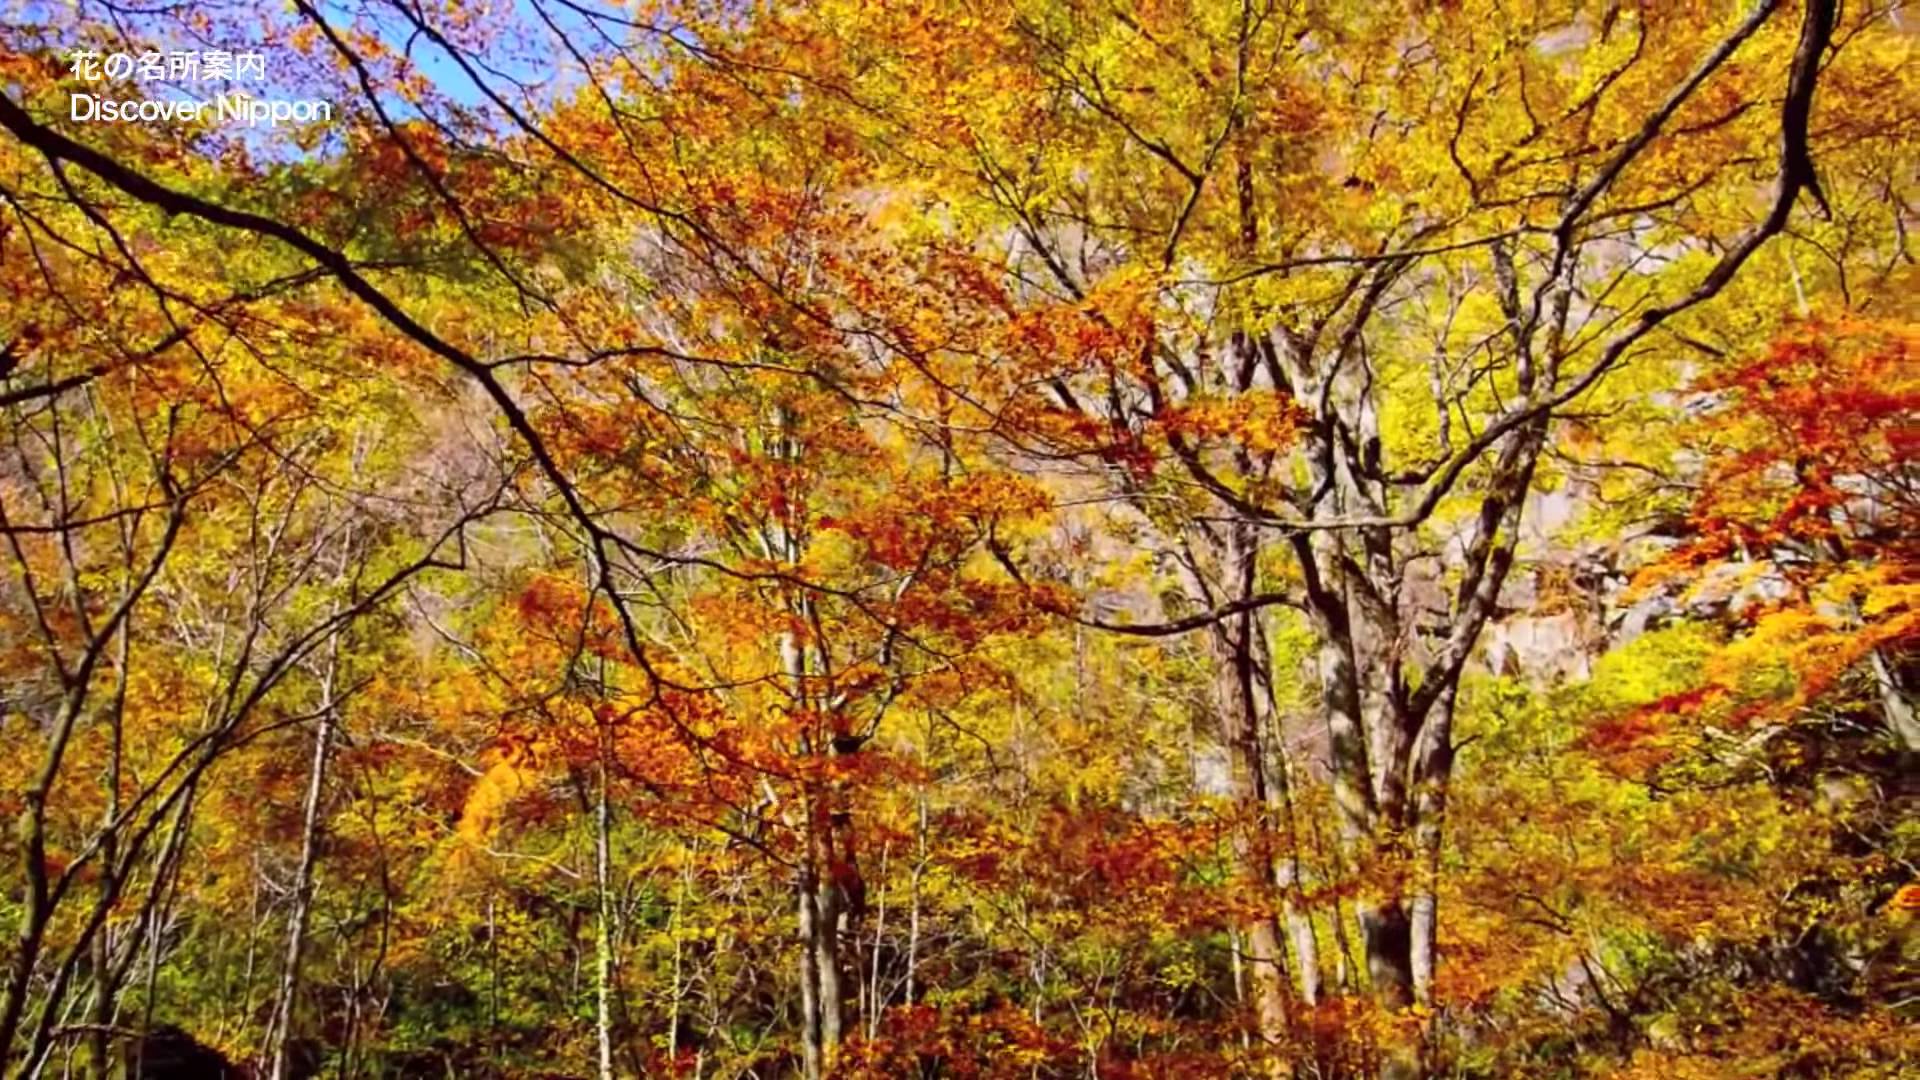 HD] Autumn leaves in Oirase Stream - YouTube